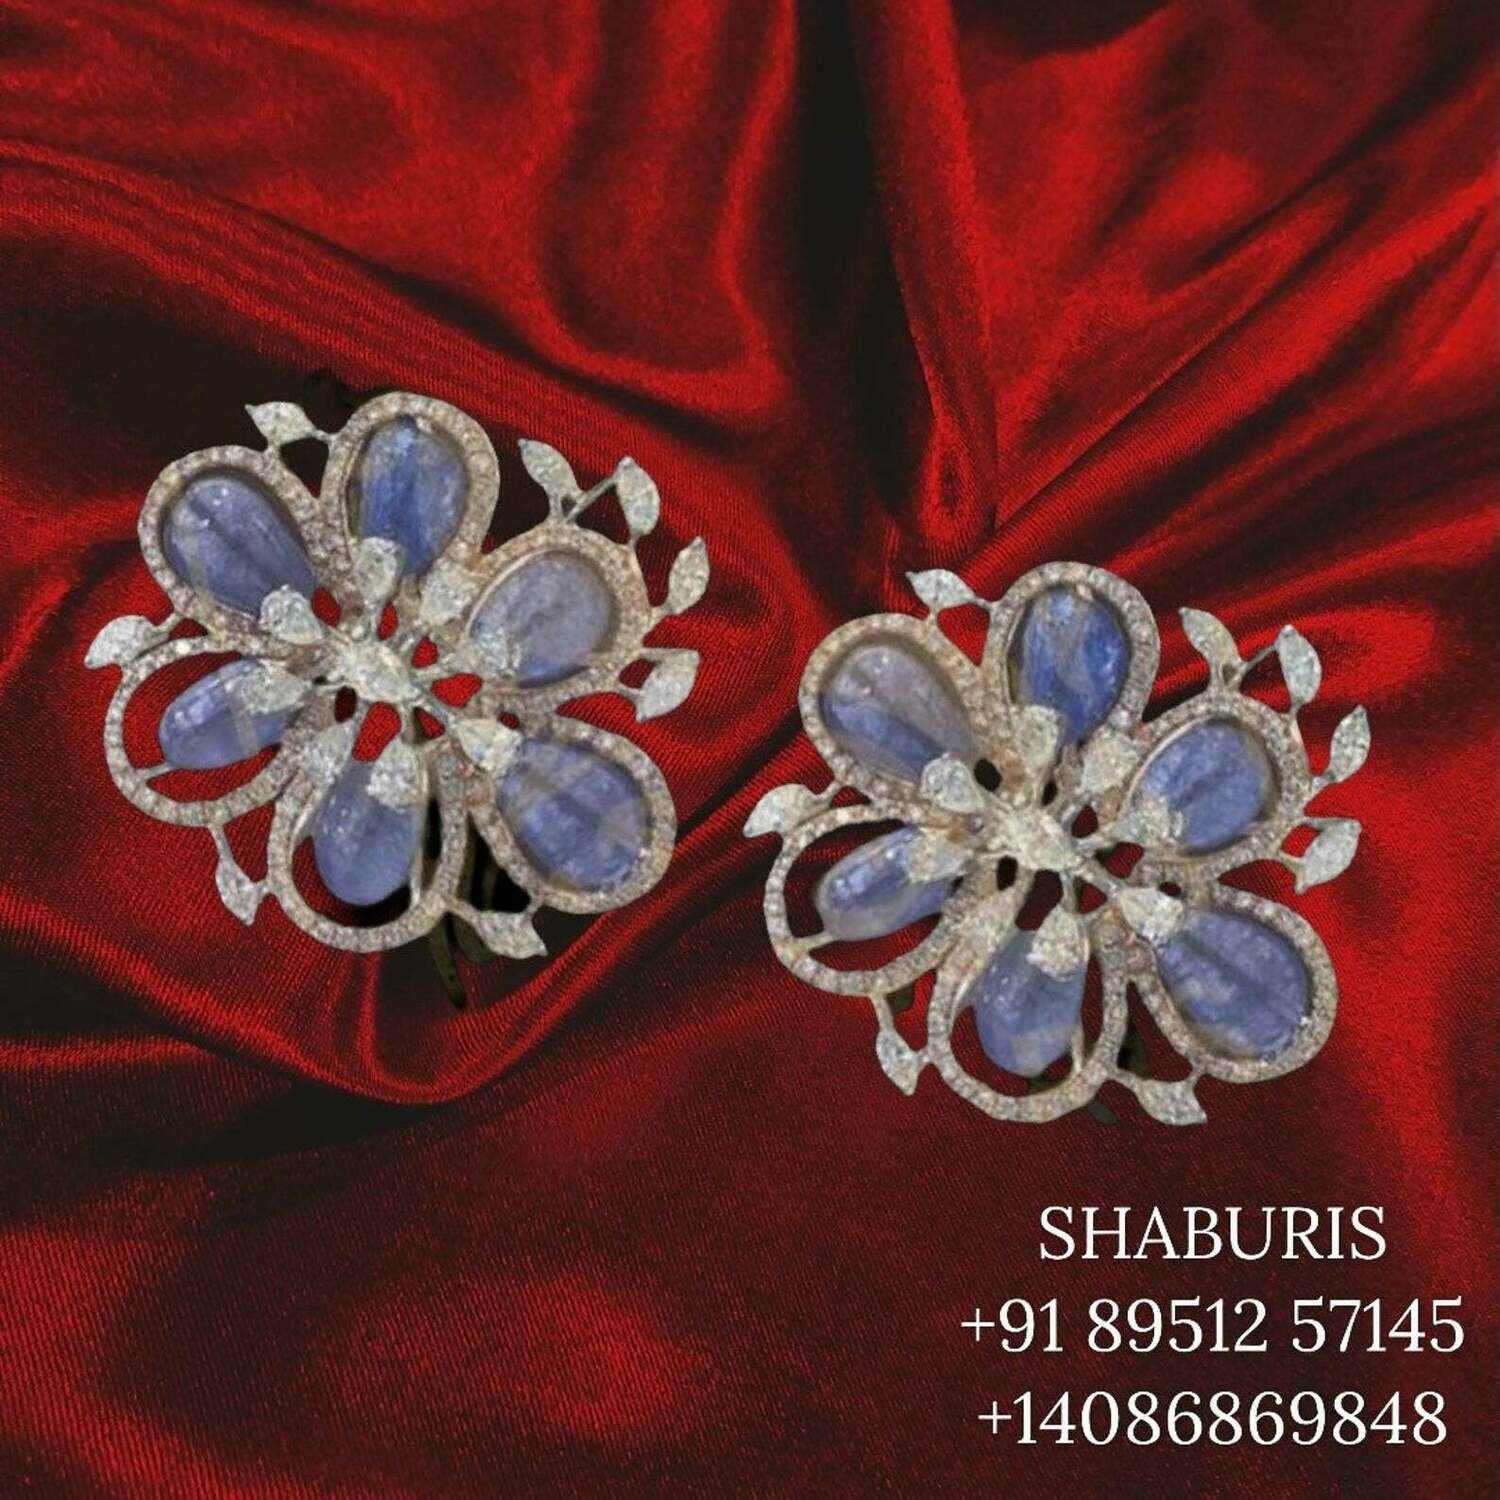 Diamond Jewelry,Pure Silver Jewellery Indian ,indian jewelry sets gold jewelry look a like tanzanite earrings diamond earrings-SHABURIS